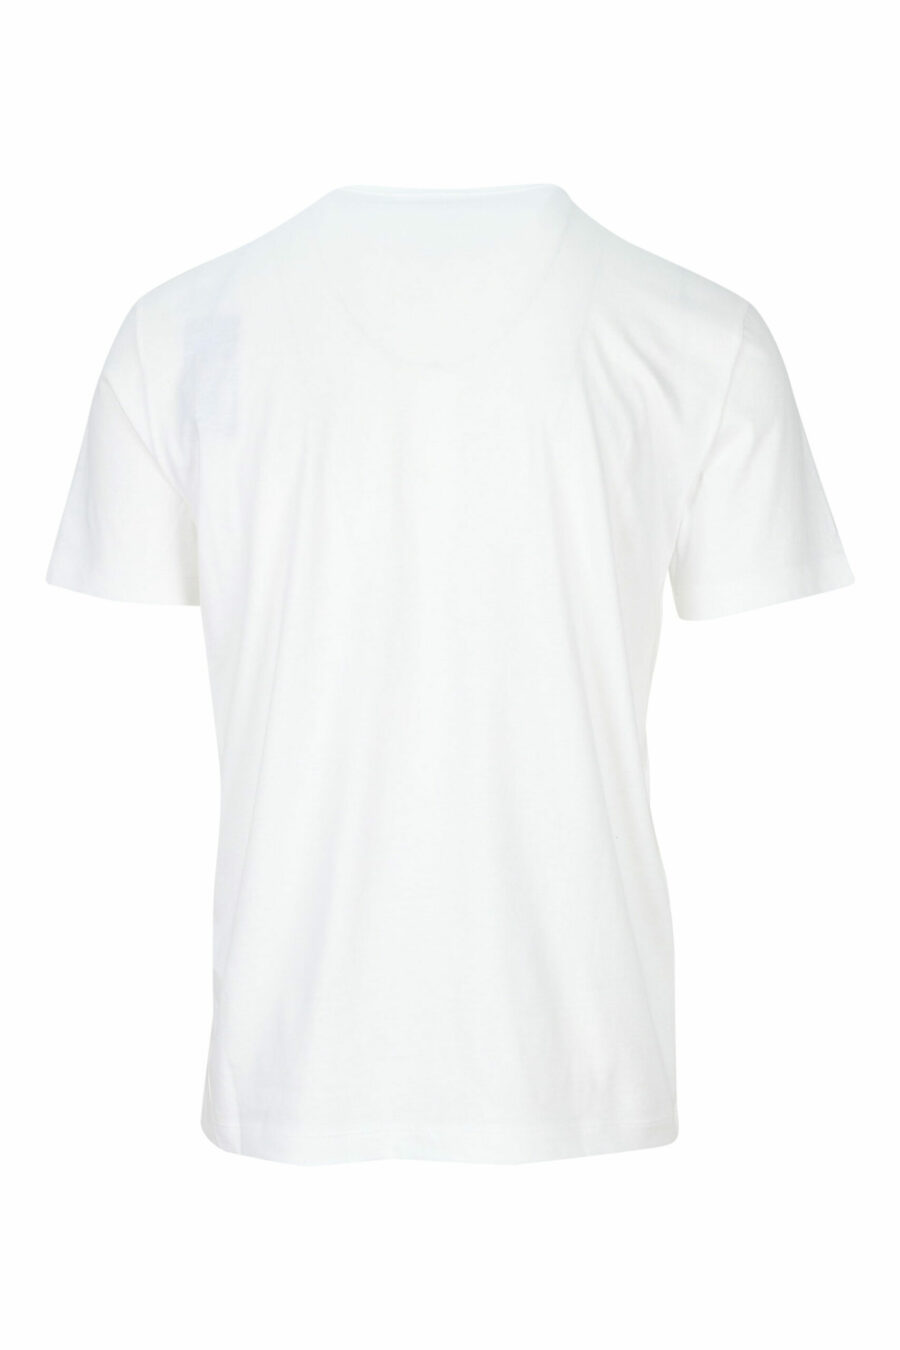 T-shirt branca com maxilogo preto "lux identity" - 8057767688486 1 à escala